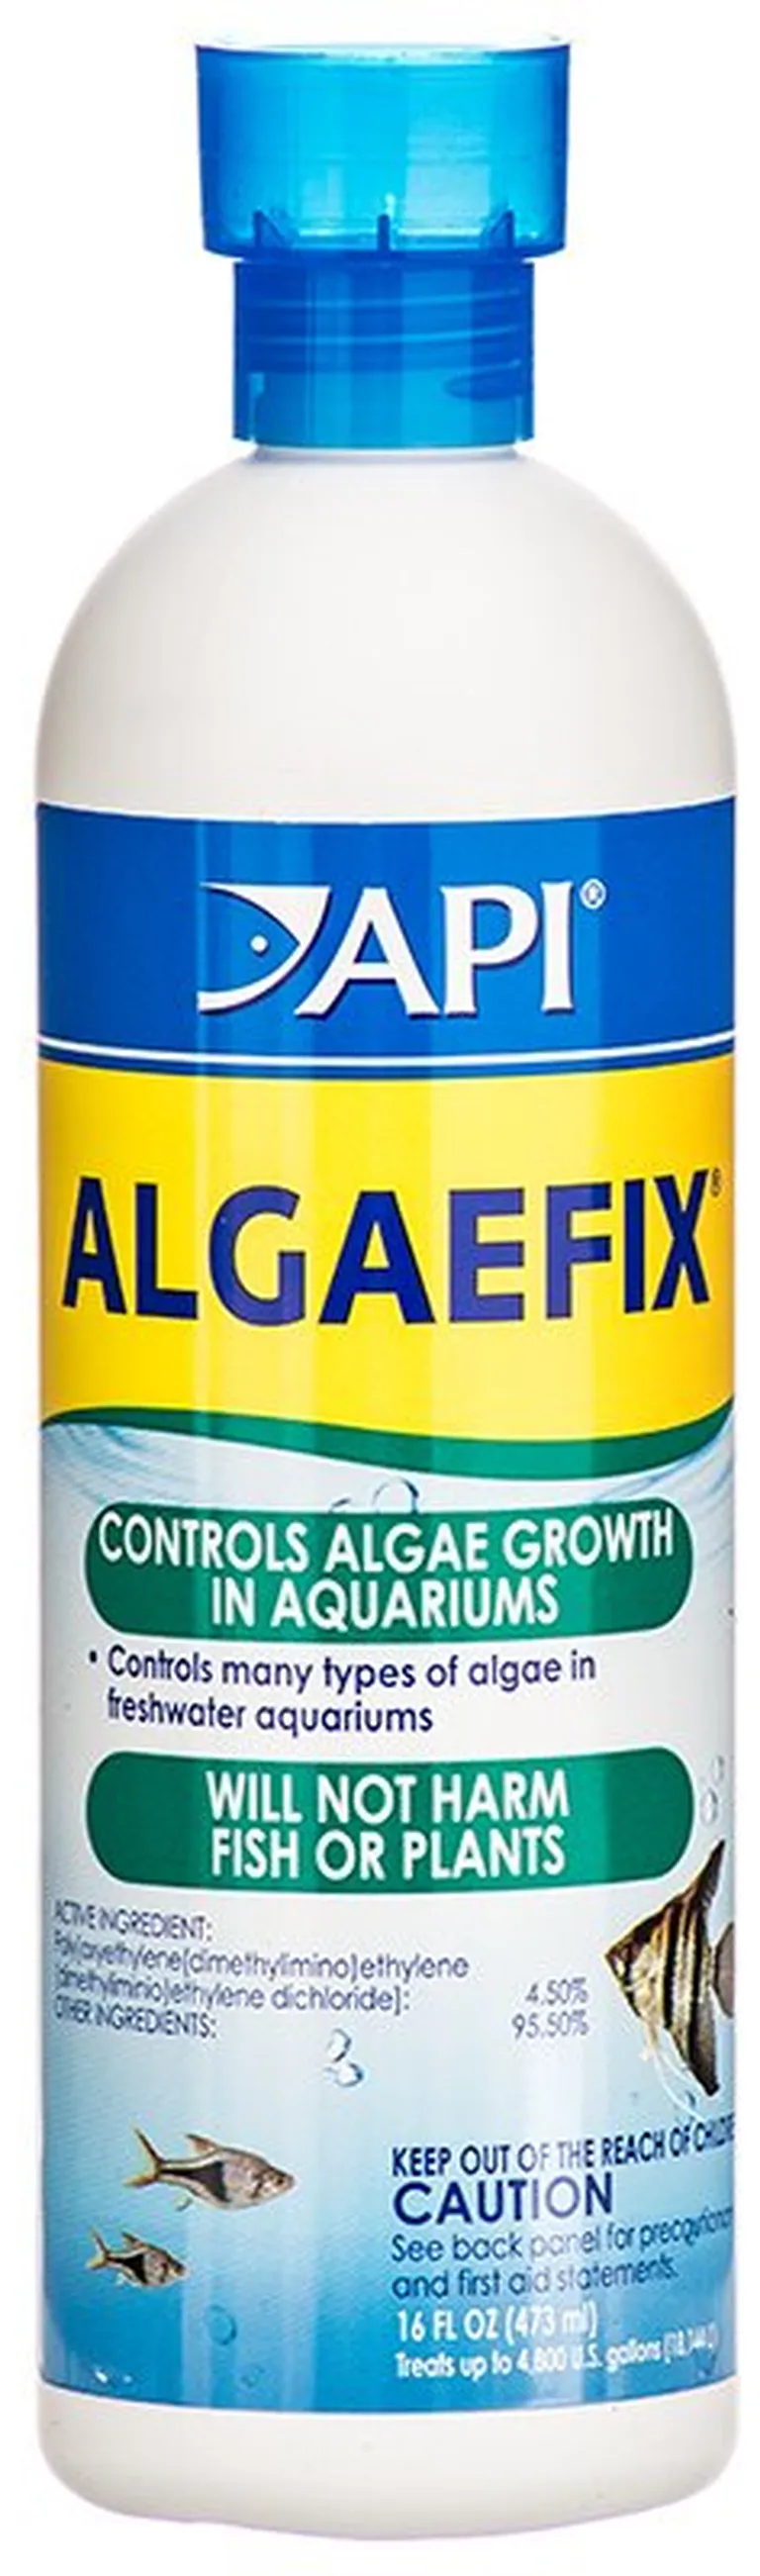 API AlgaeFix Controls Algae Growth for Freshwater Aquariums Photo 1